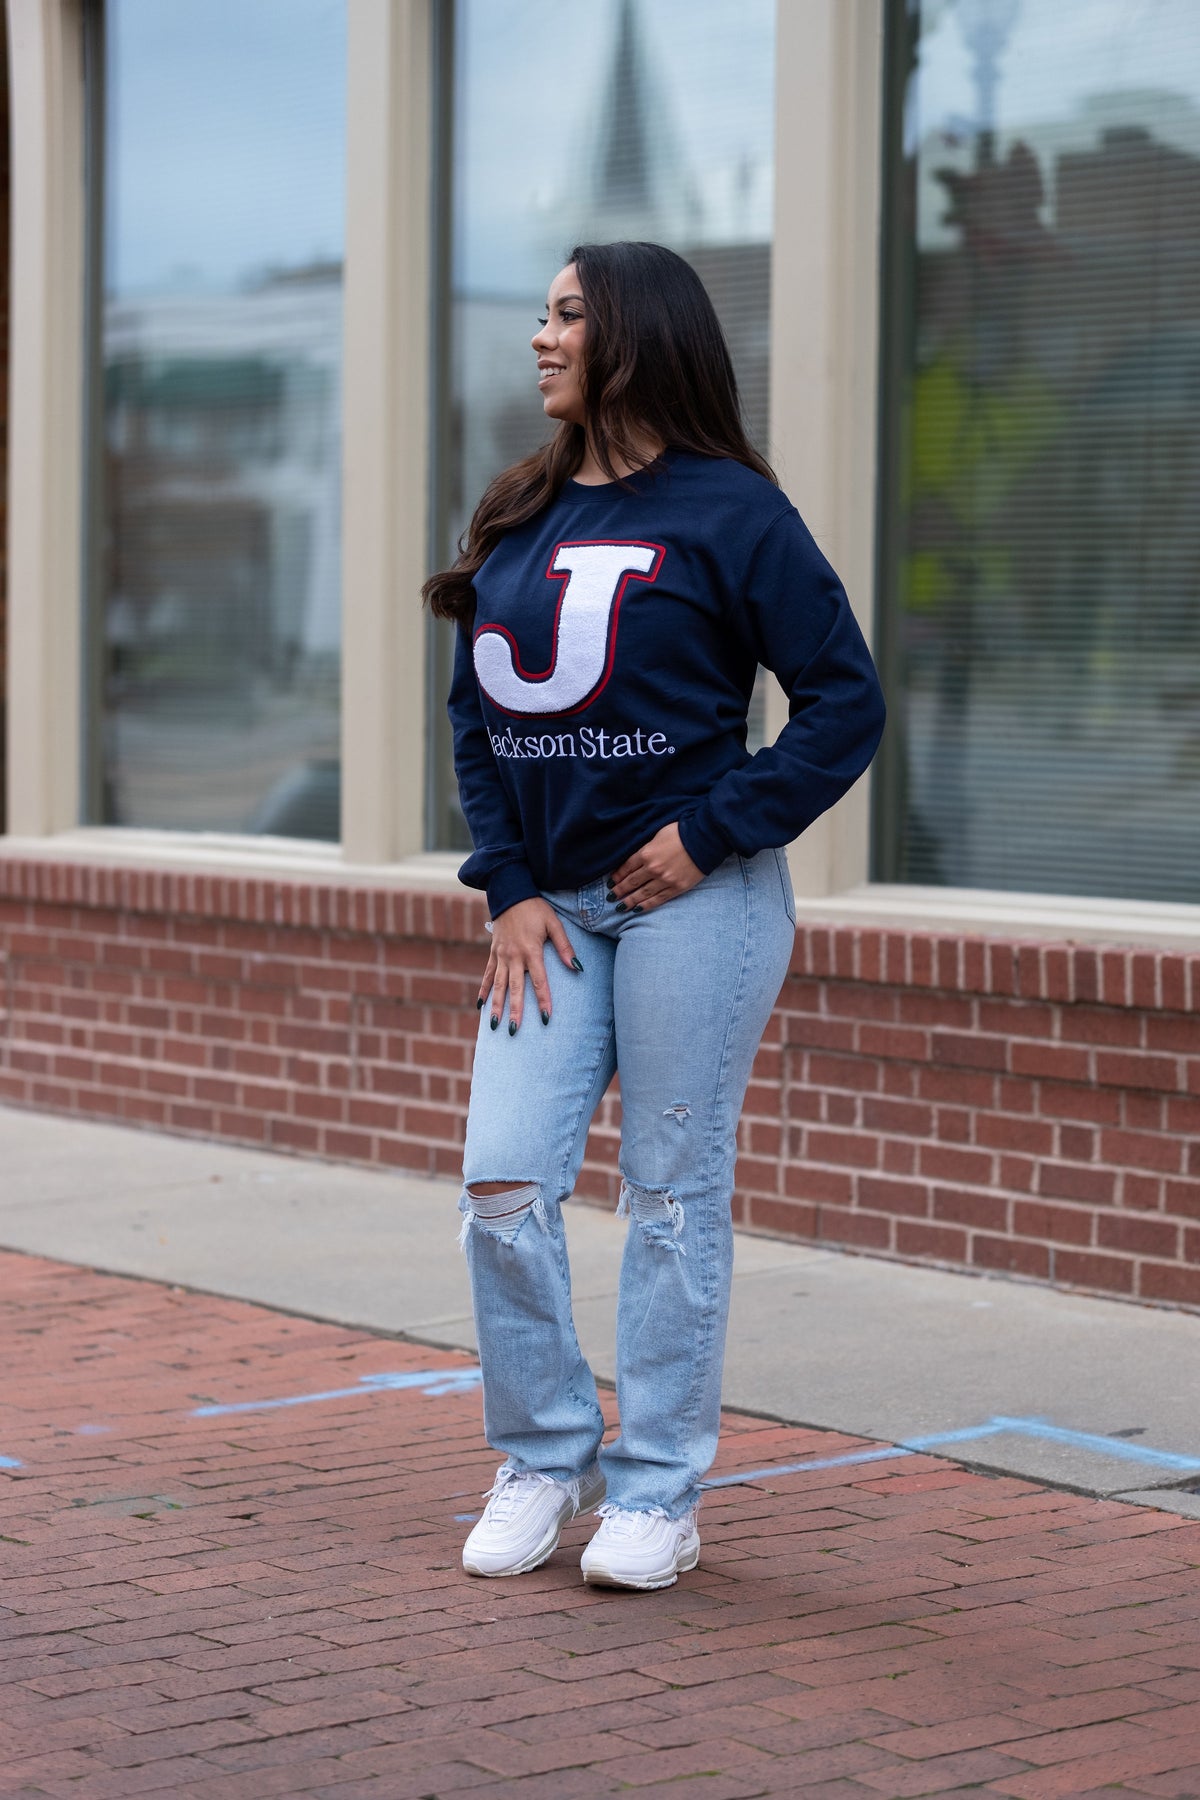 Jackson State University, "J" Blue Sweatshirt (Unisex)